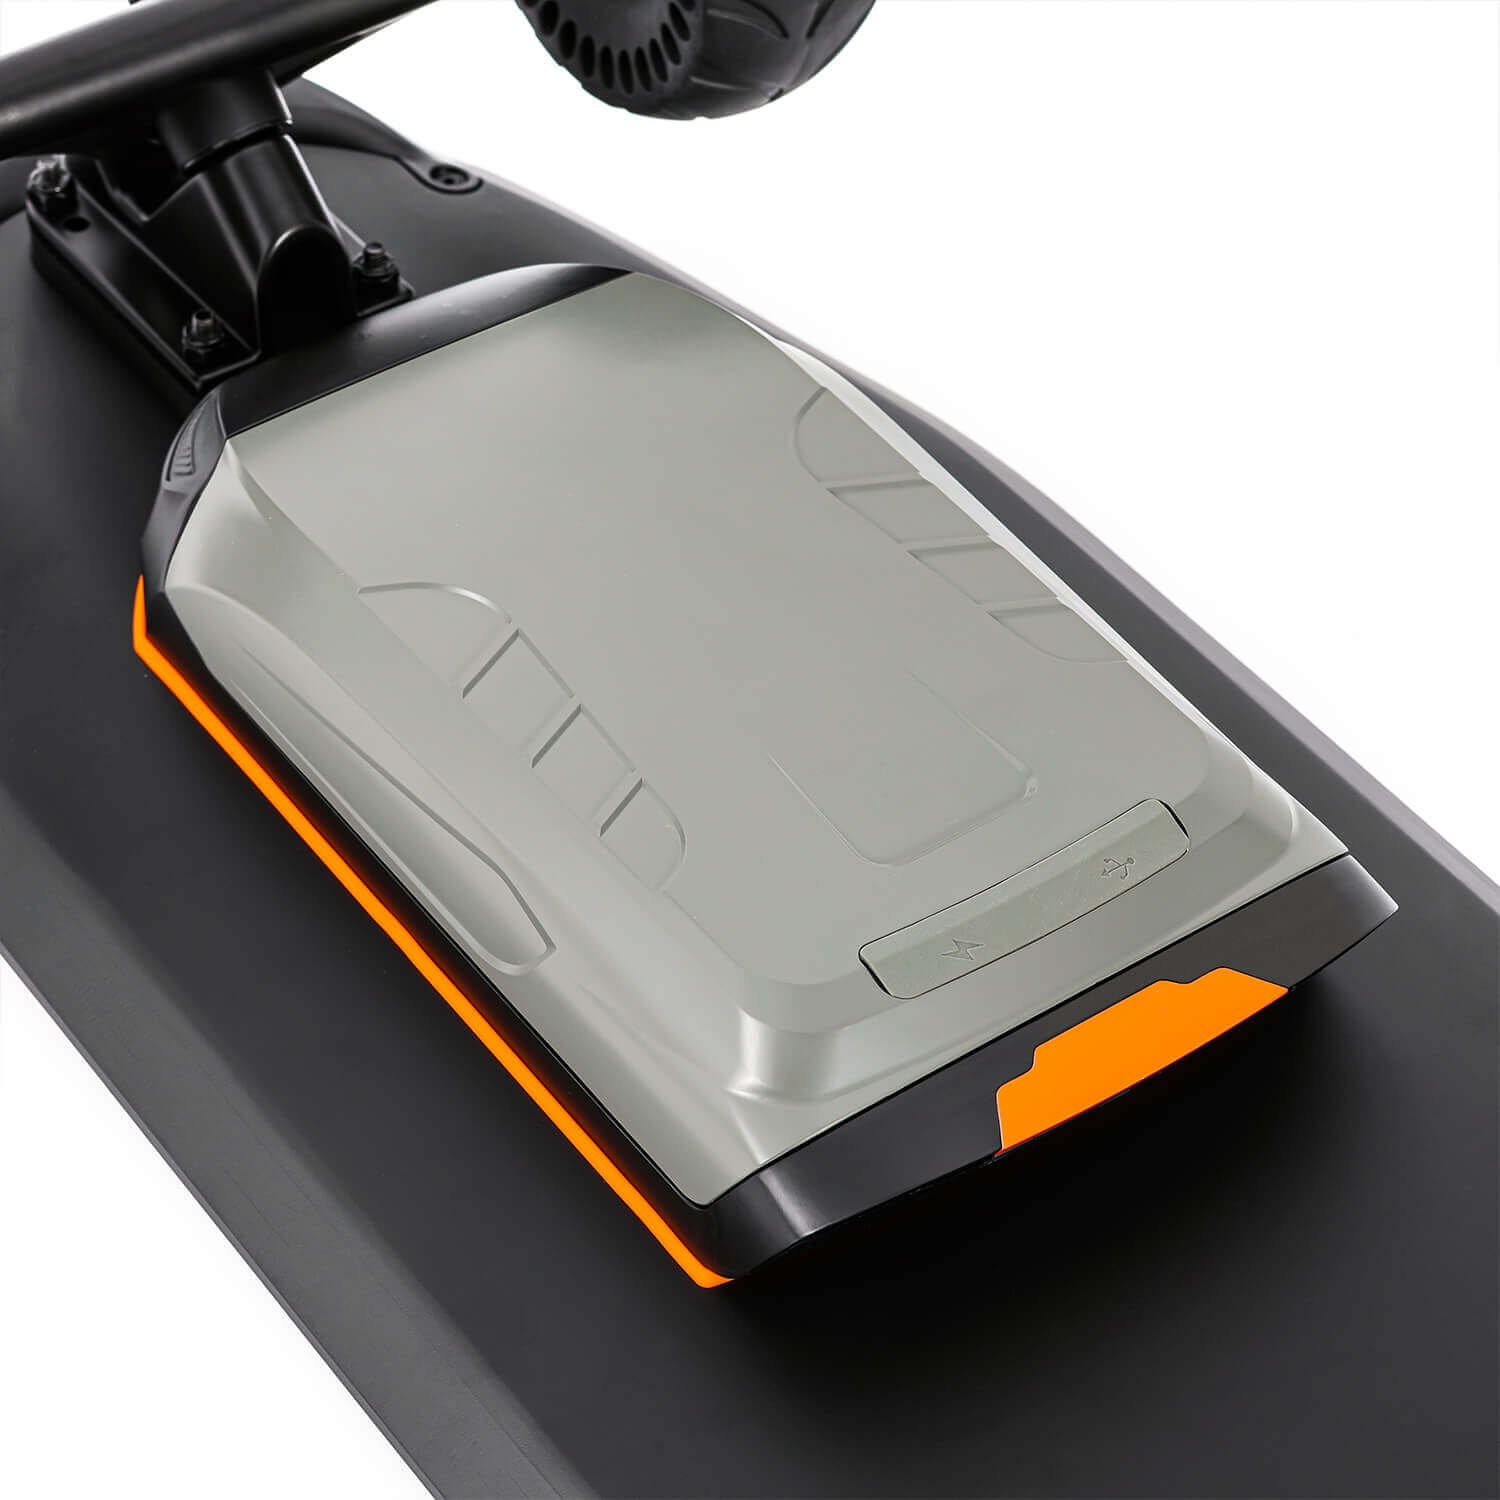 UIOFO Electric Skateboard